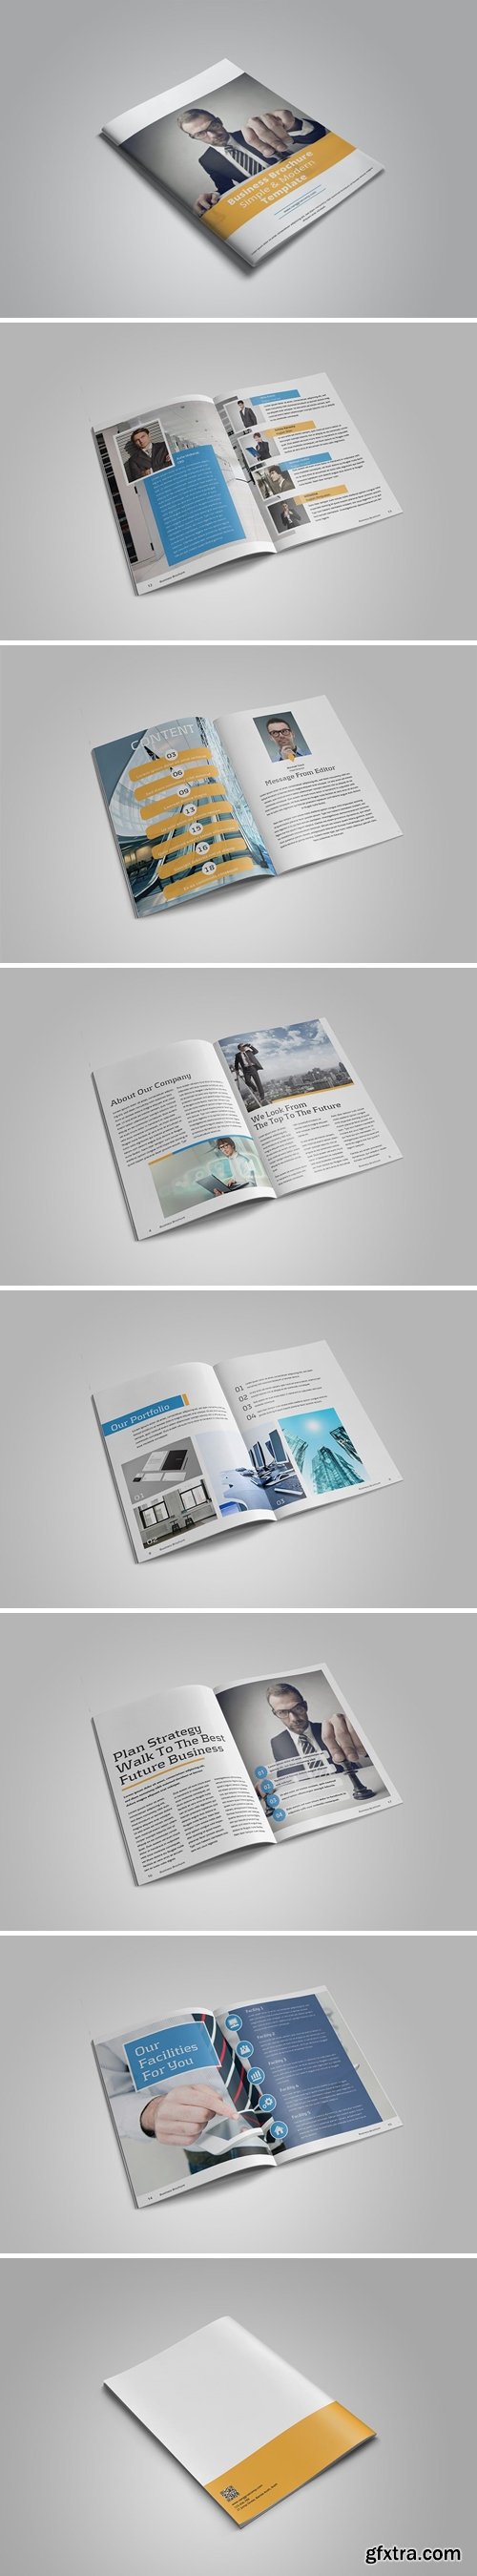 HQ - Corporate Brochure 15